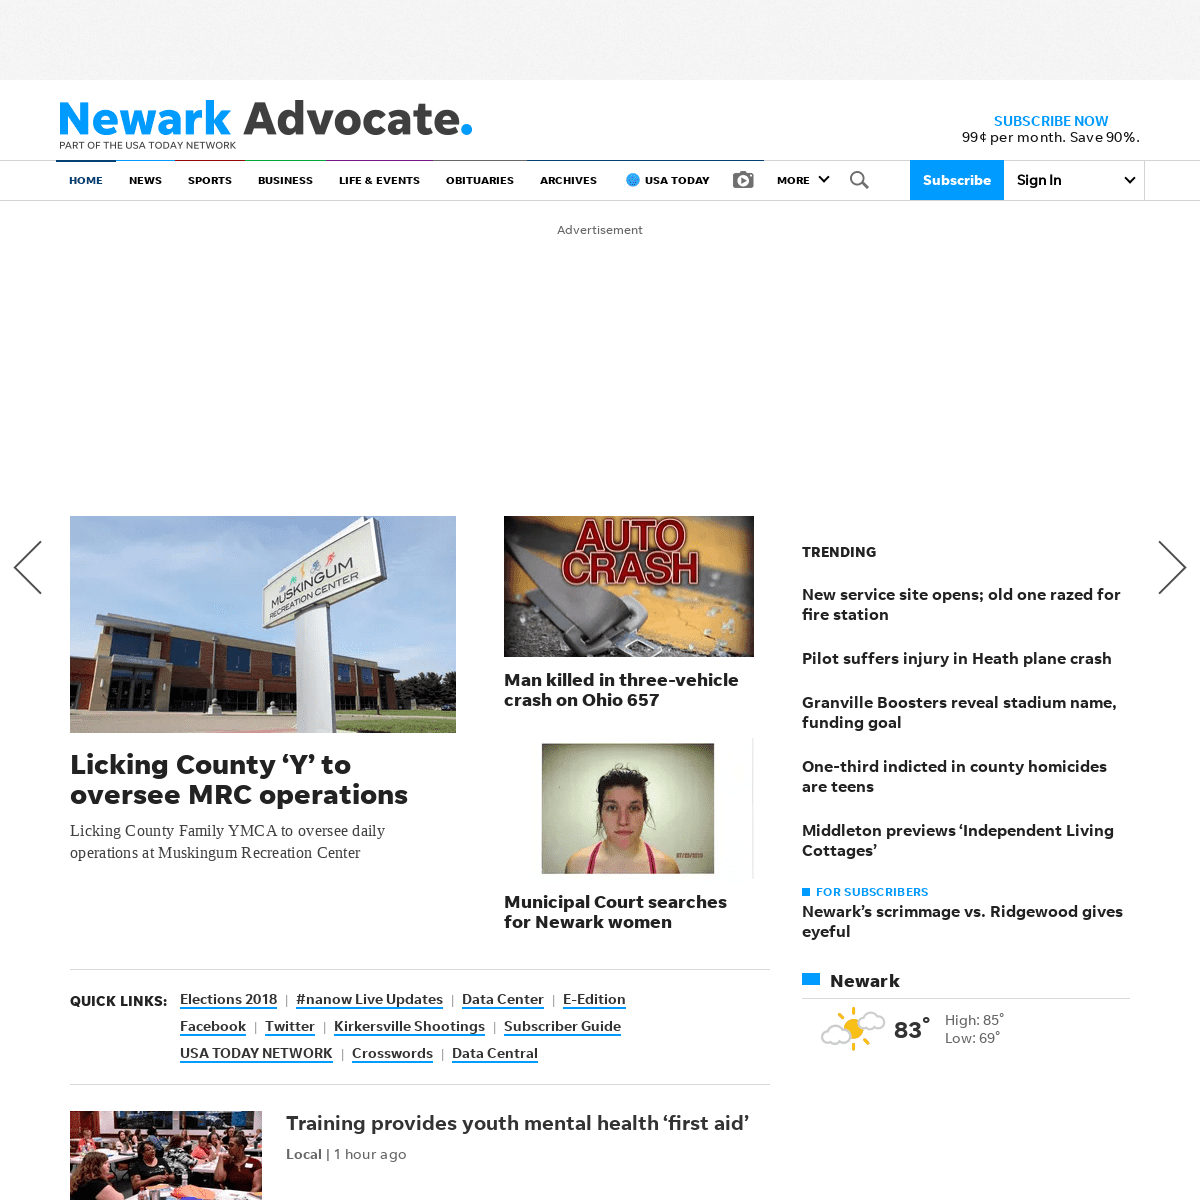 The Newark Advocate